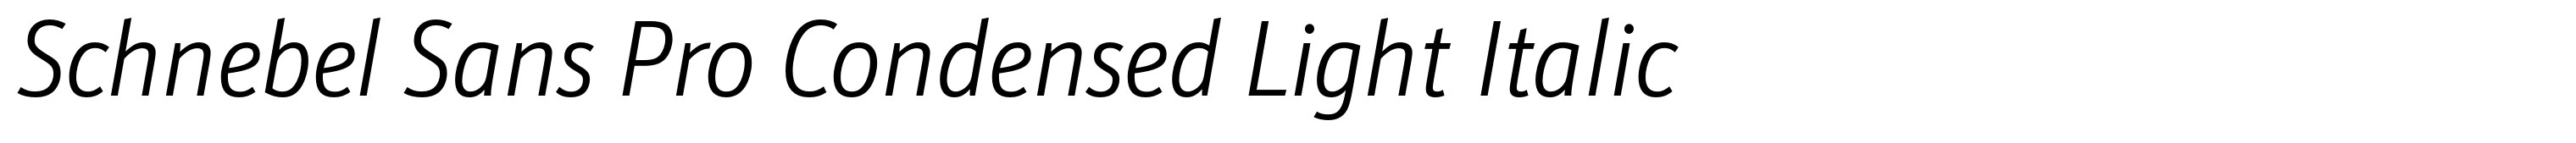 Schnebel Sans Pro Condensed Light Italic